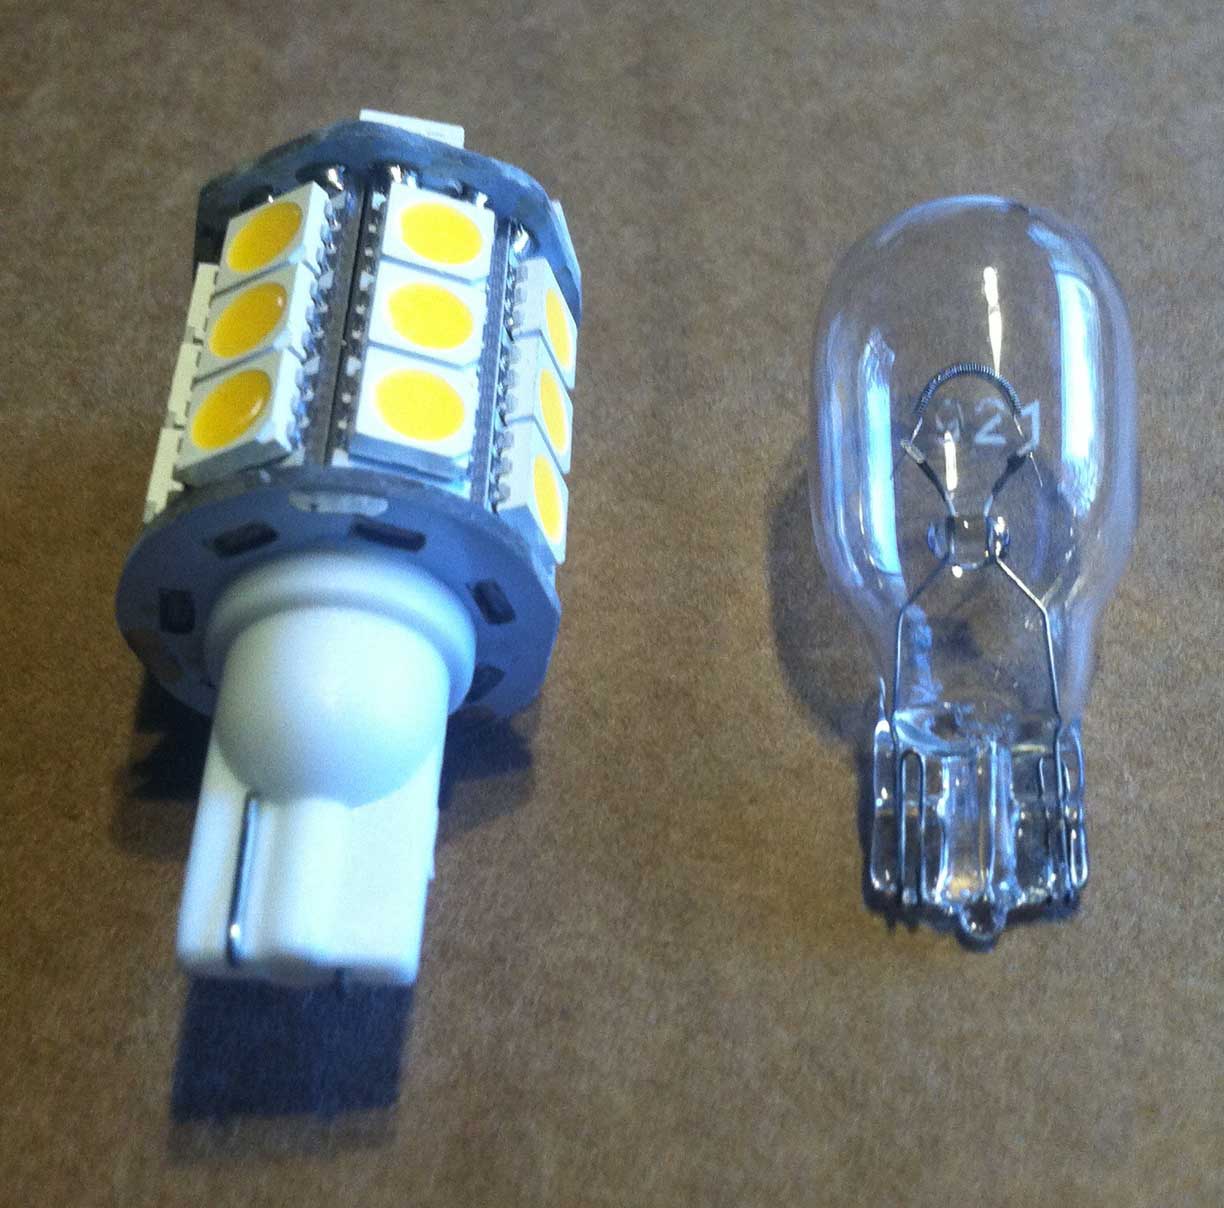 921 LED on left, standard 921 on right.